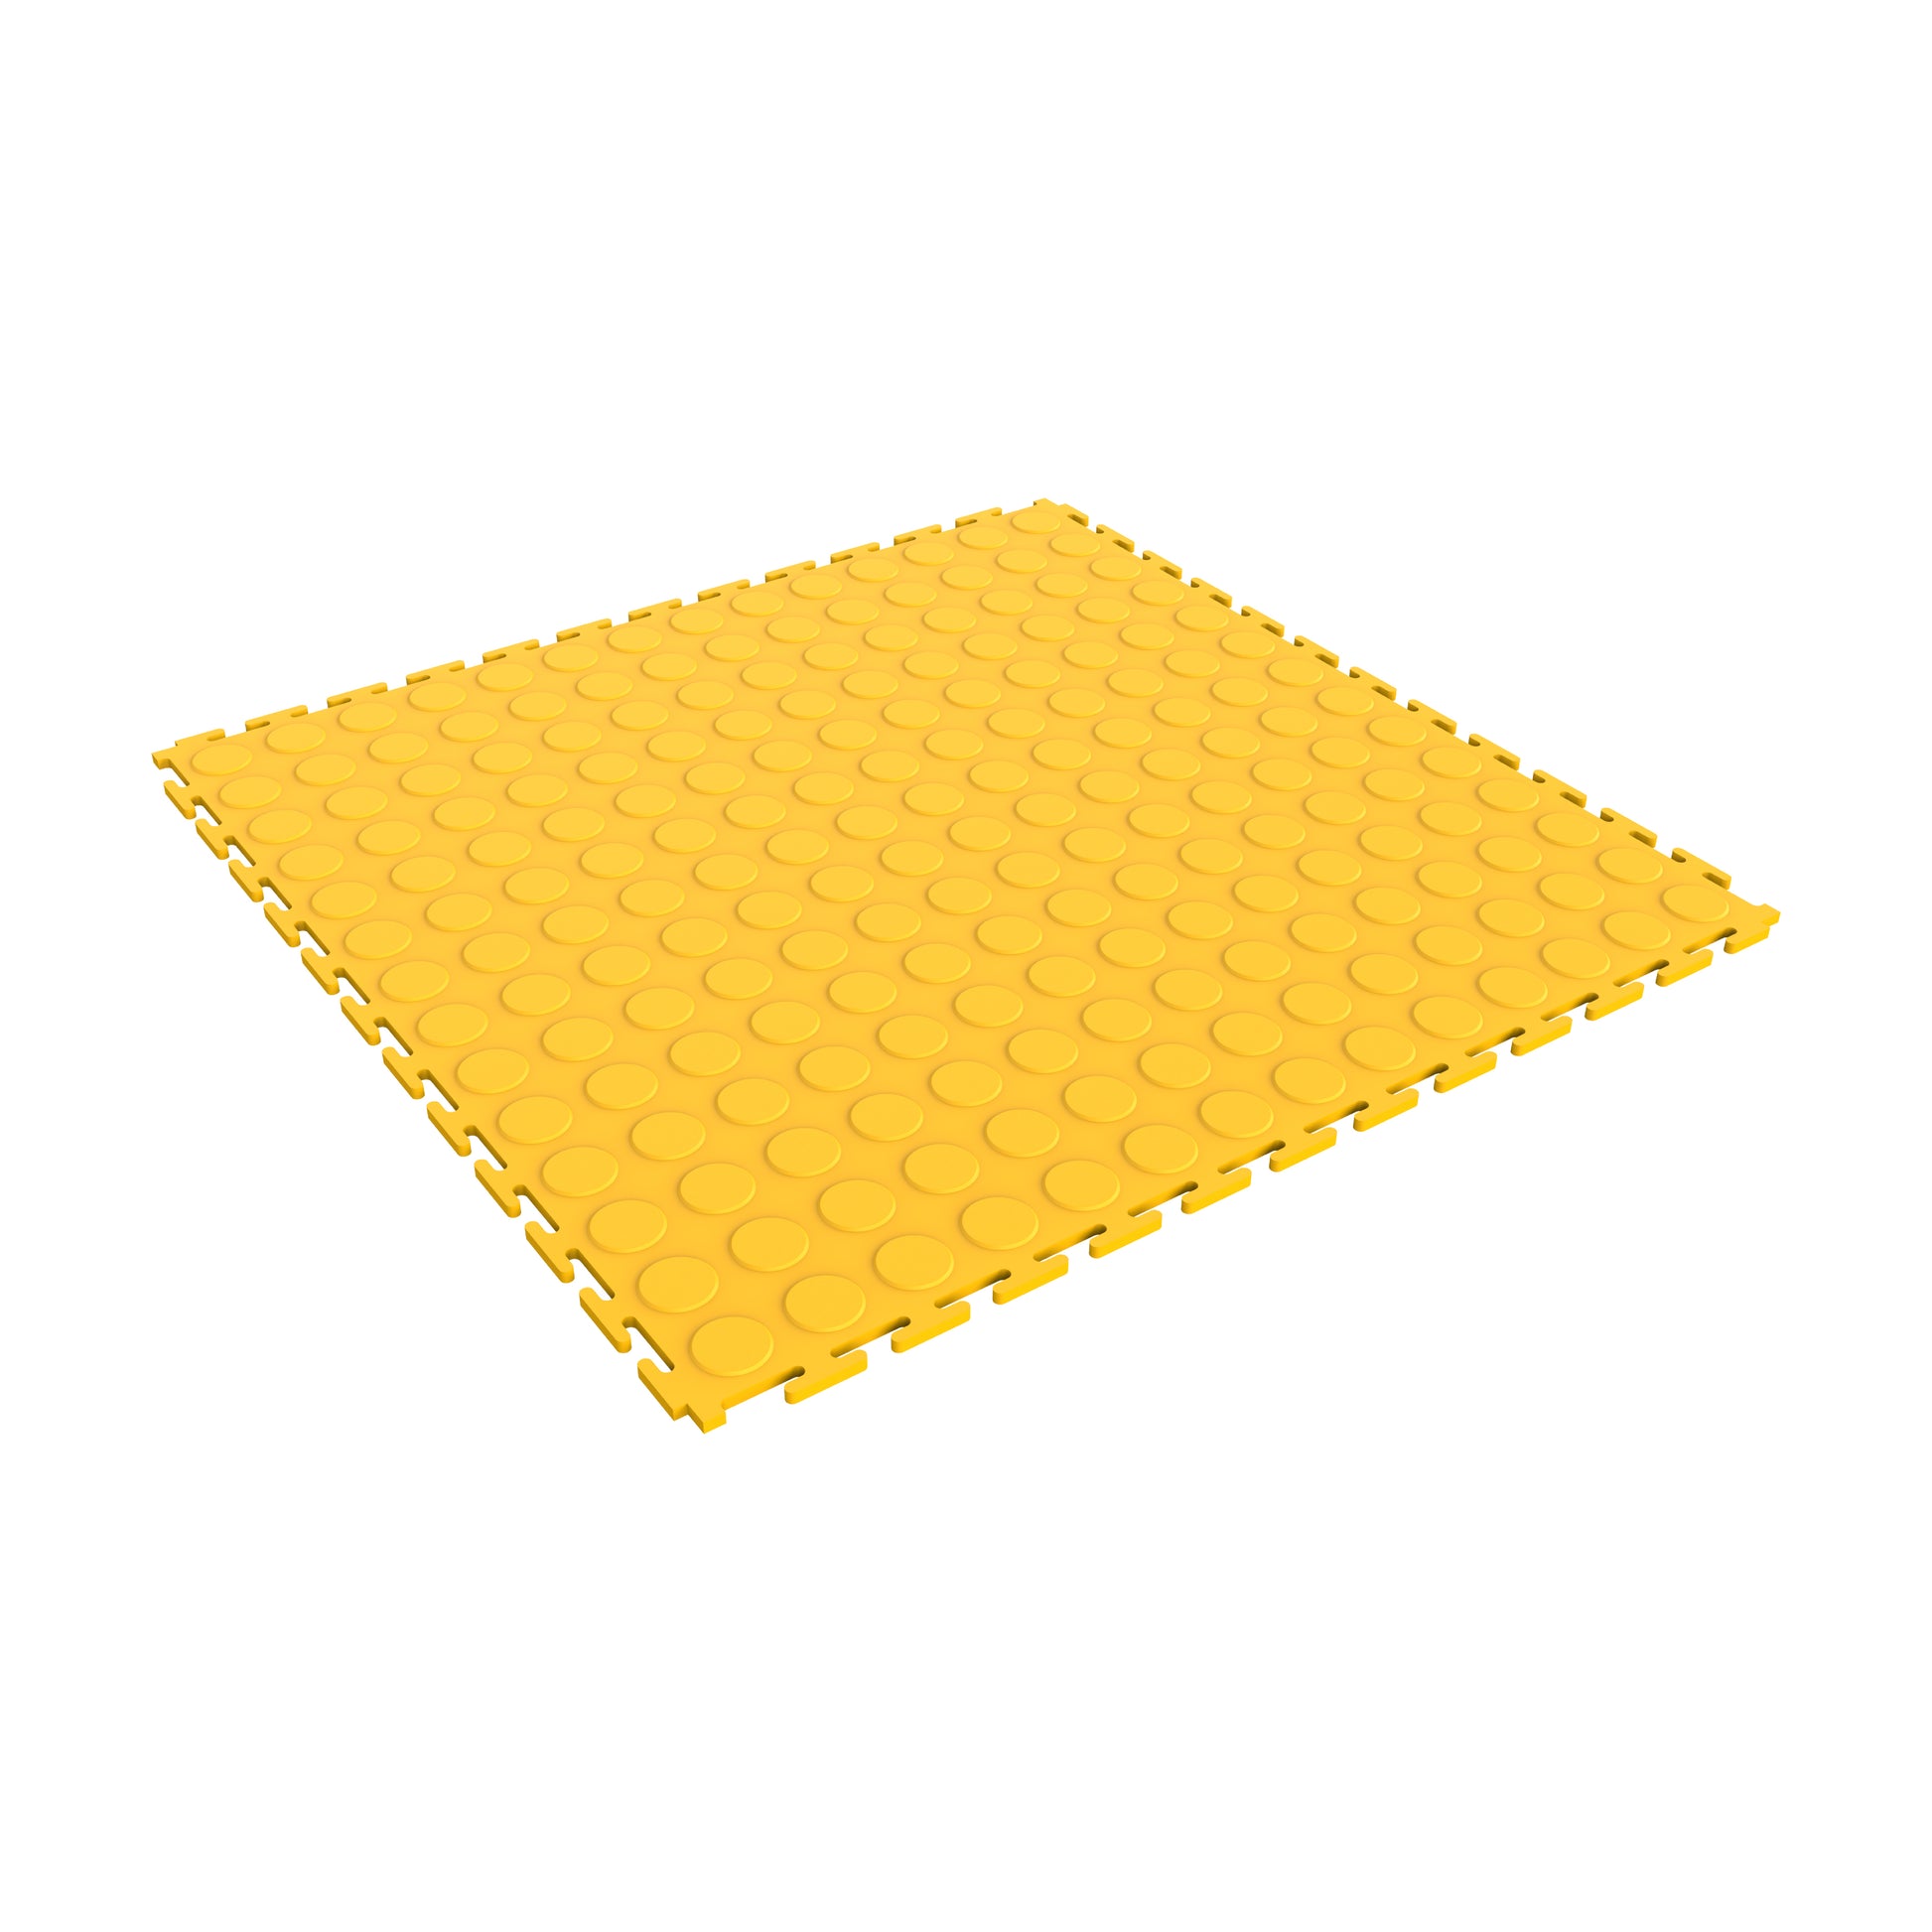 Cosmoplast 51 cm Modular PVC Floor Flexi Tiles